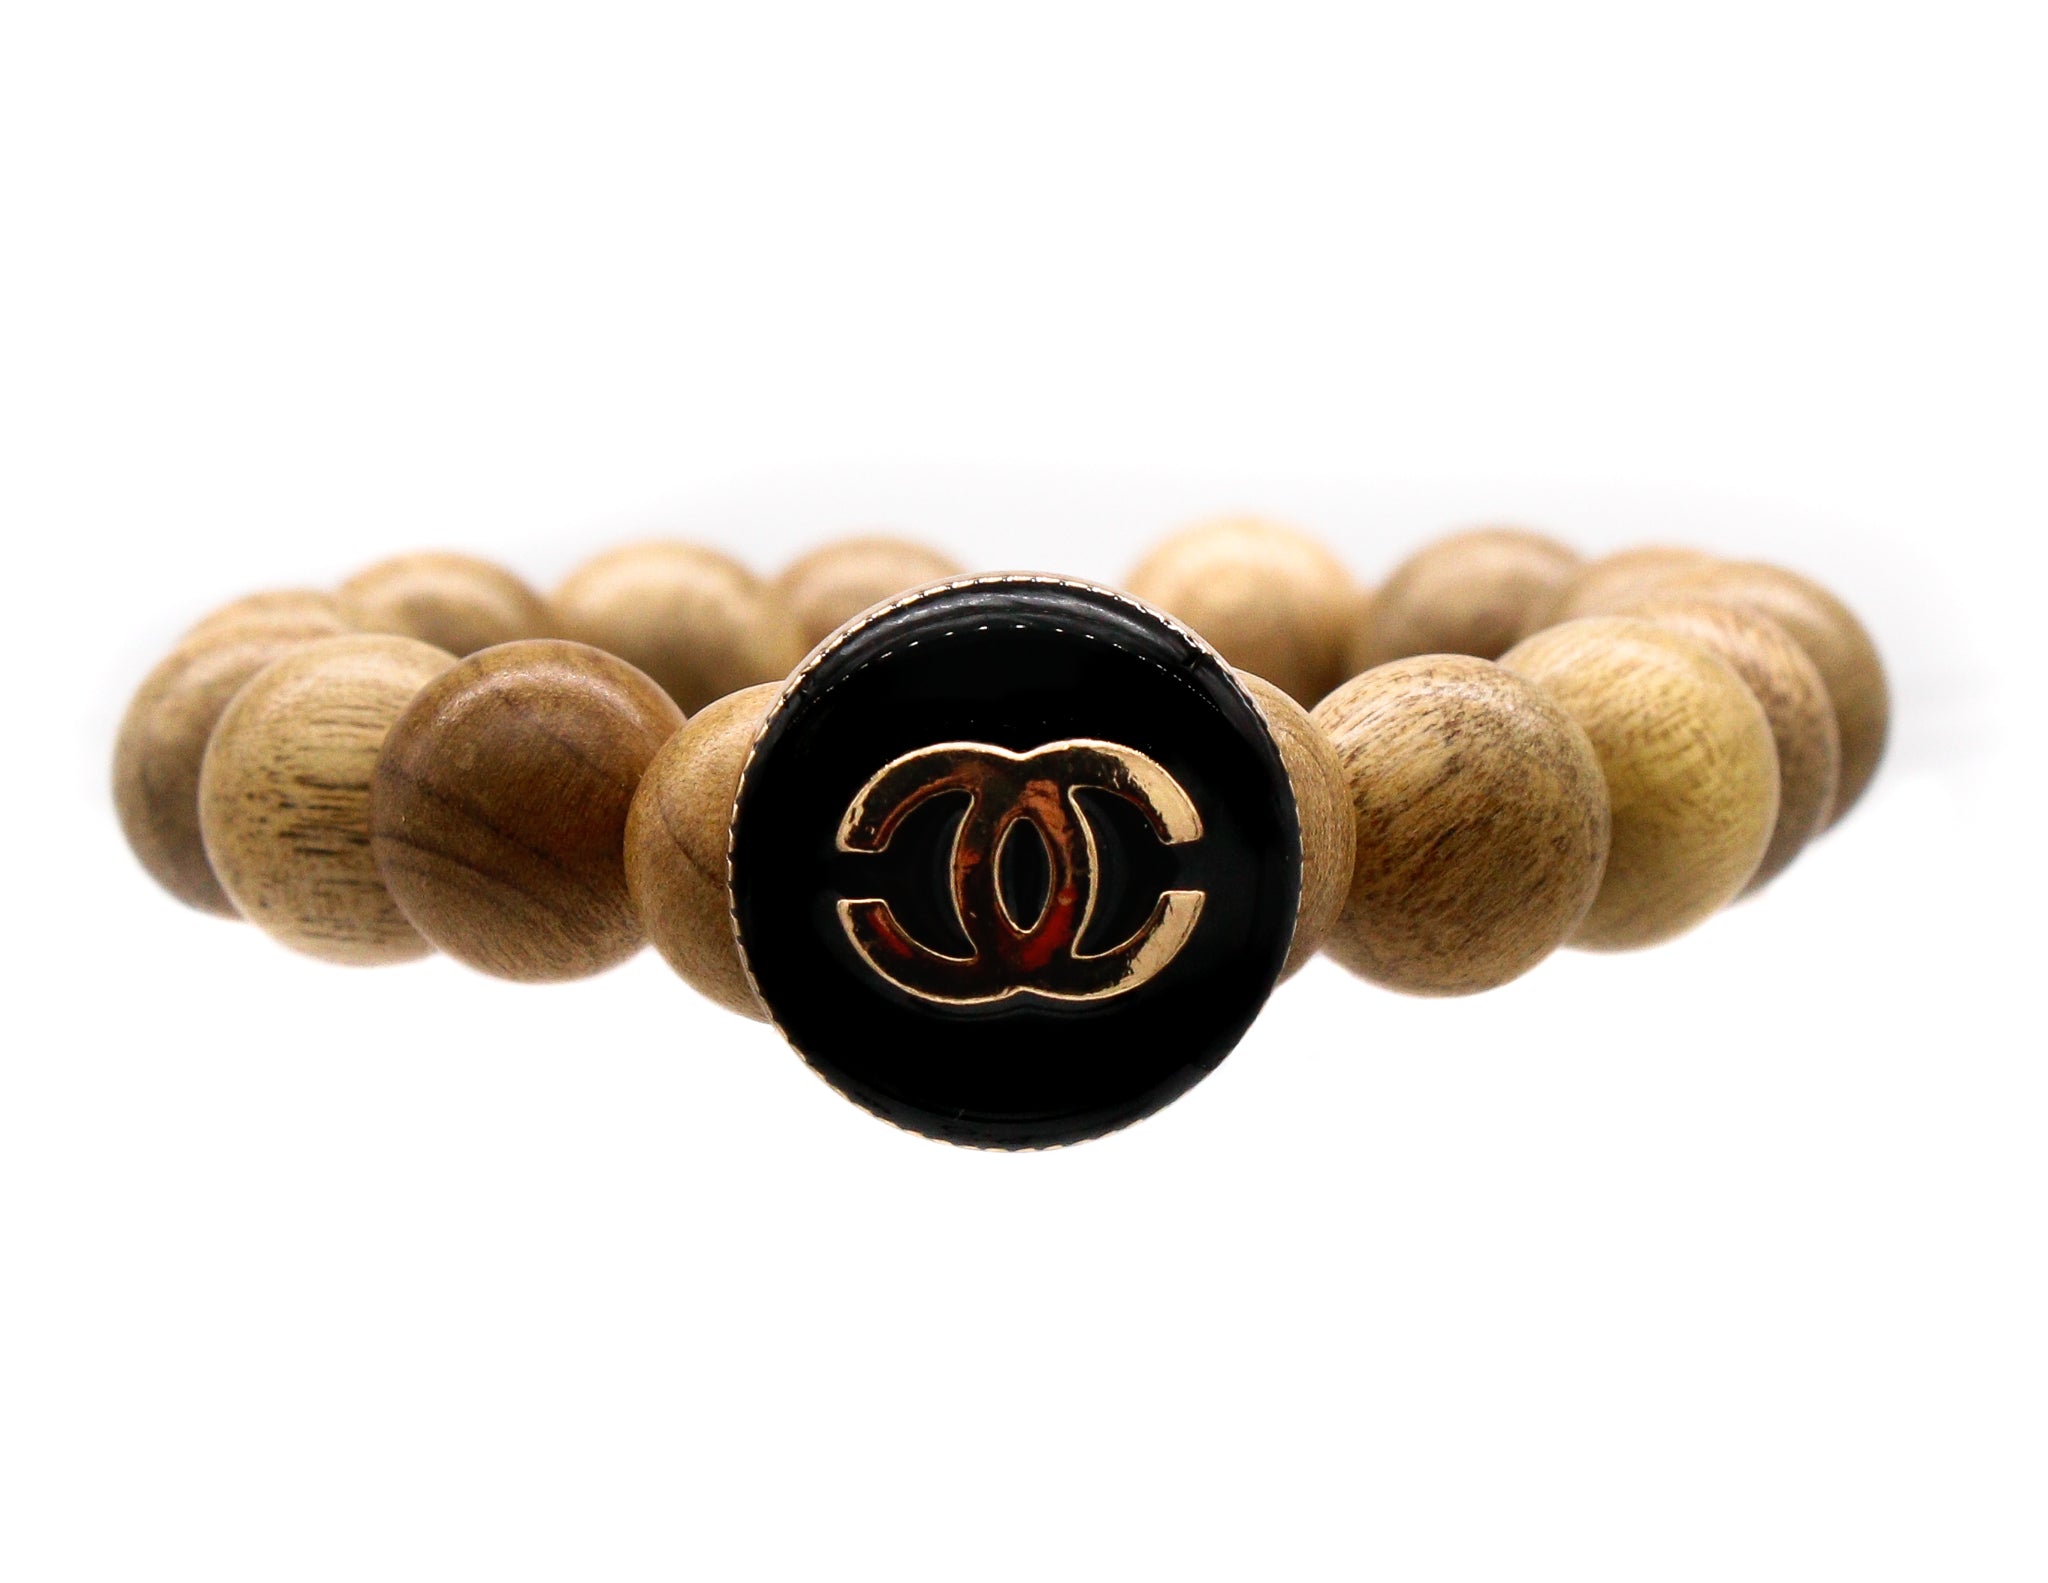 Sandalwood bracelet with a repurposed designer button